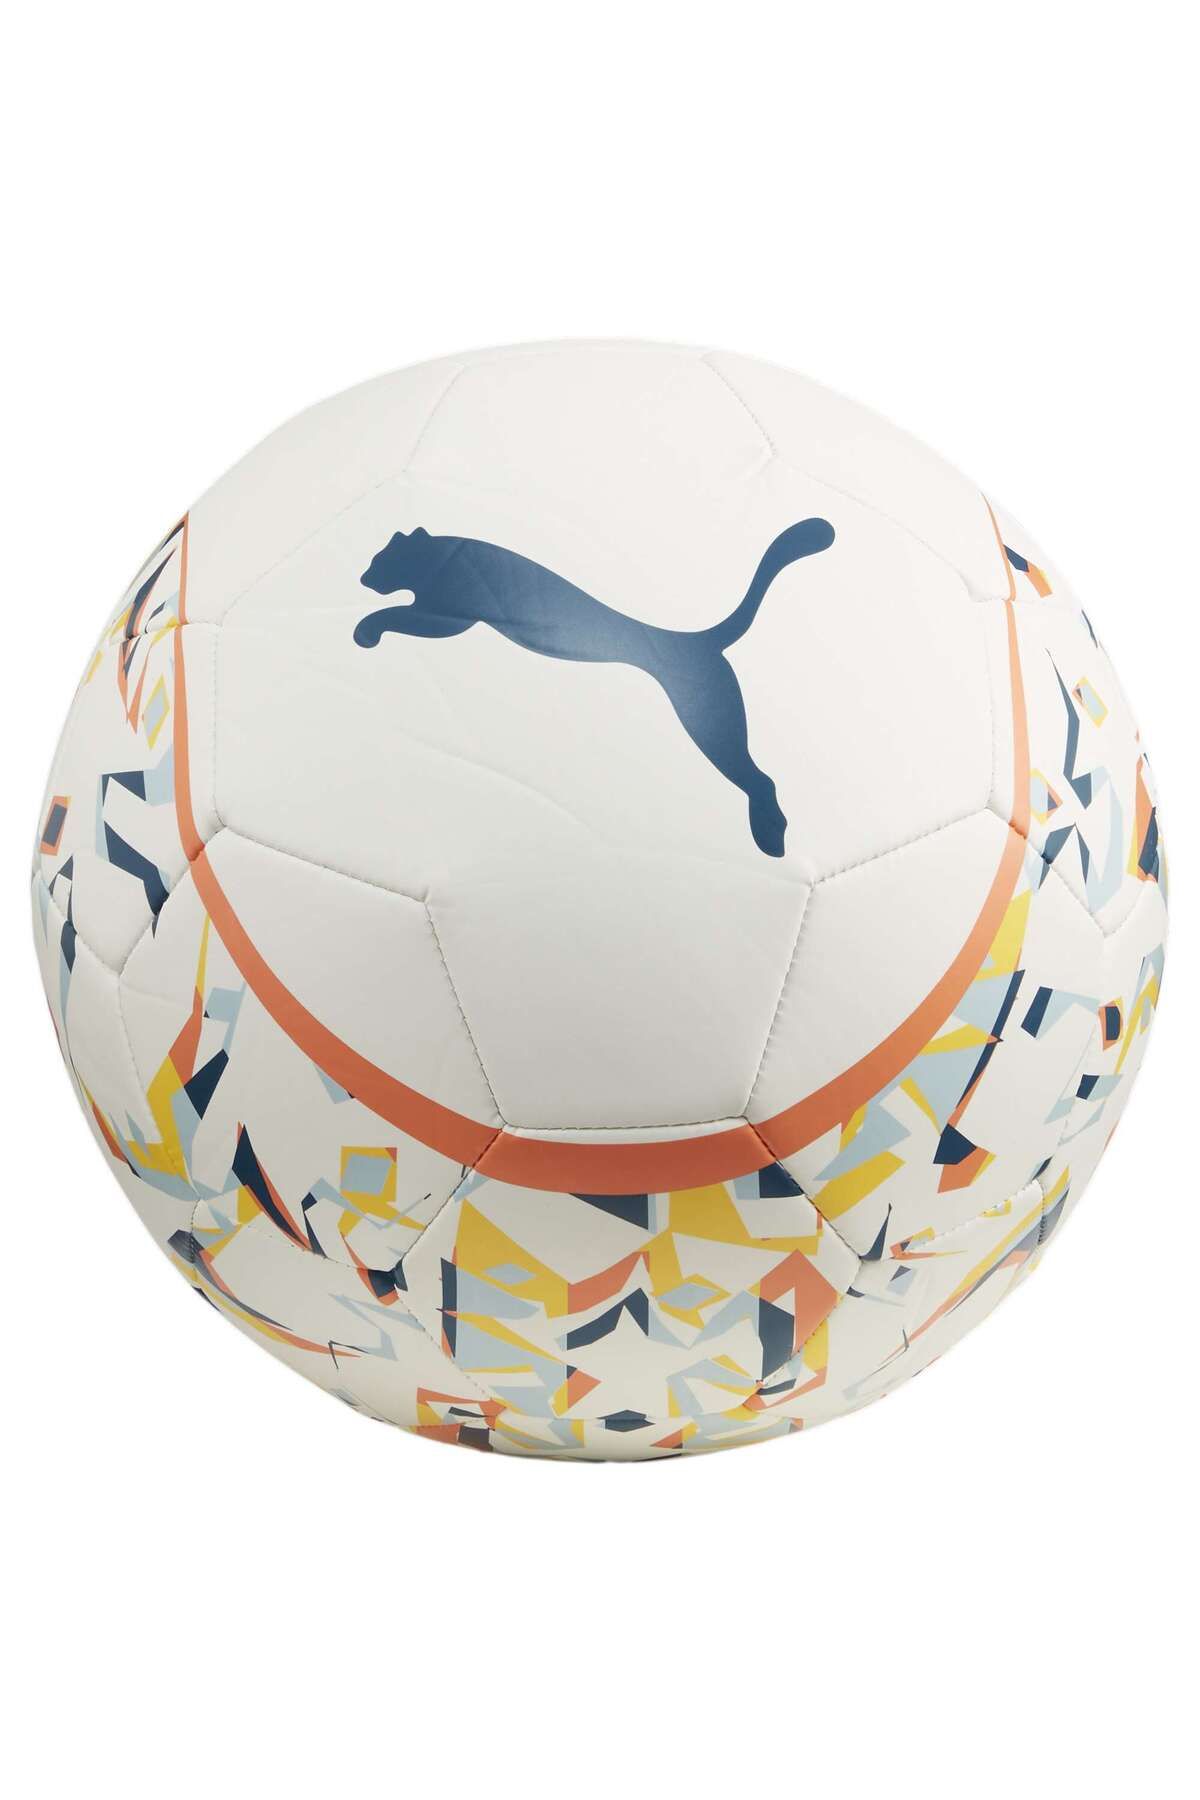 Puma Neymar Graphic Beyaz Futbol Topu (084232-01)